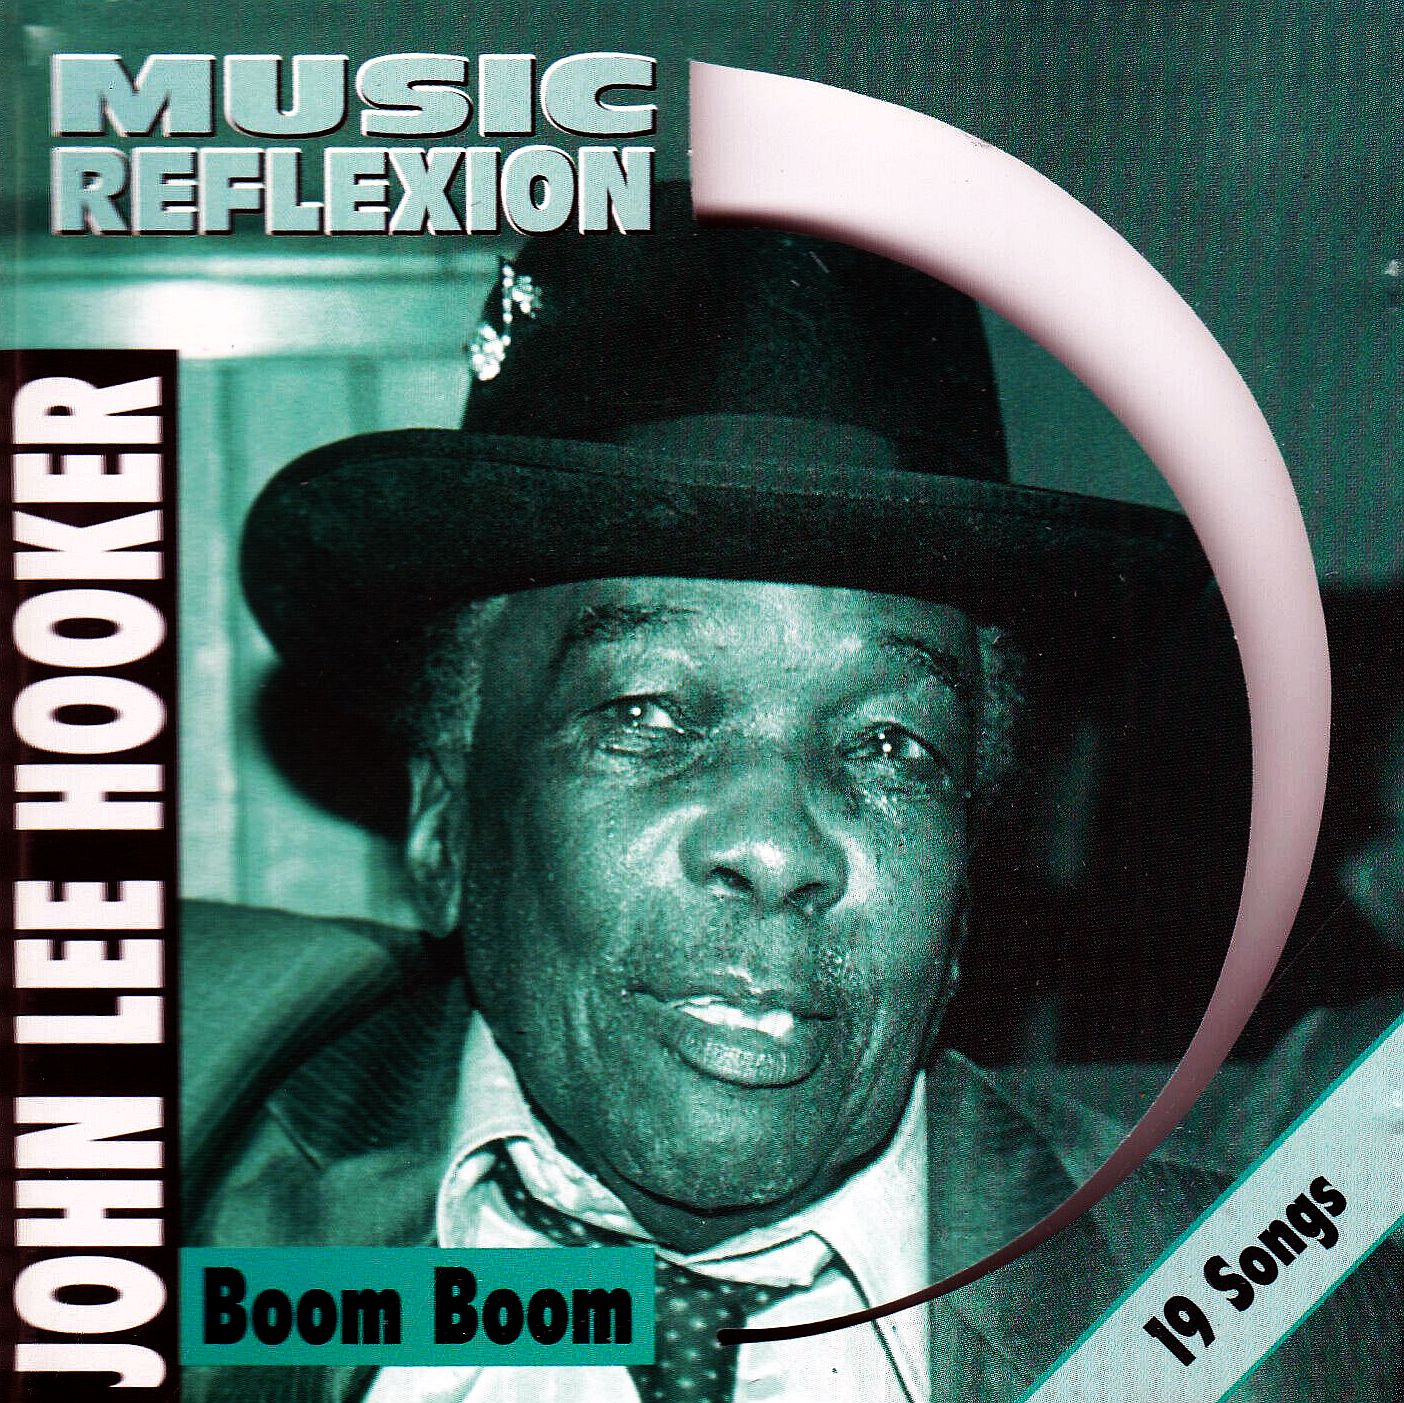 HOOKER JOHN LEE - Boom Boom (Music Reflection)